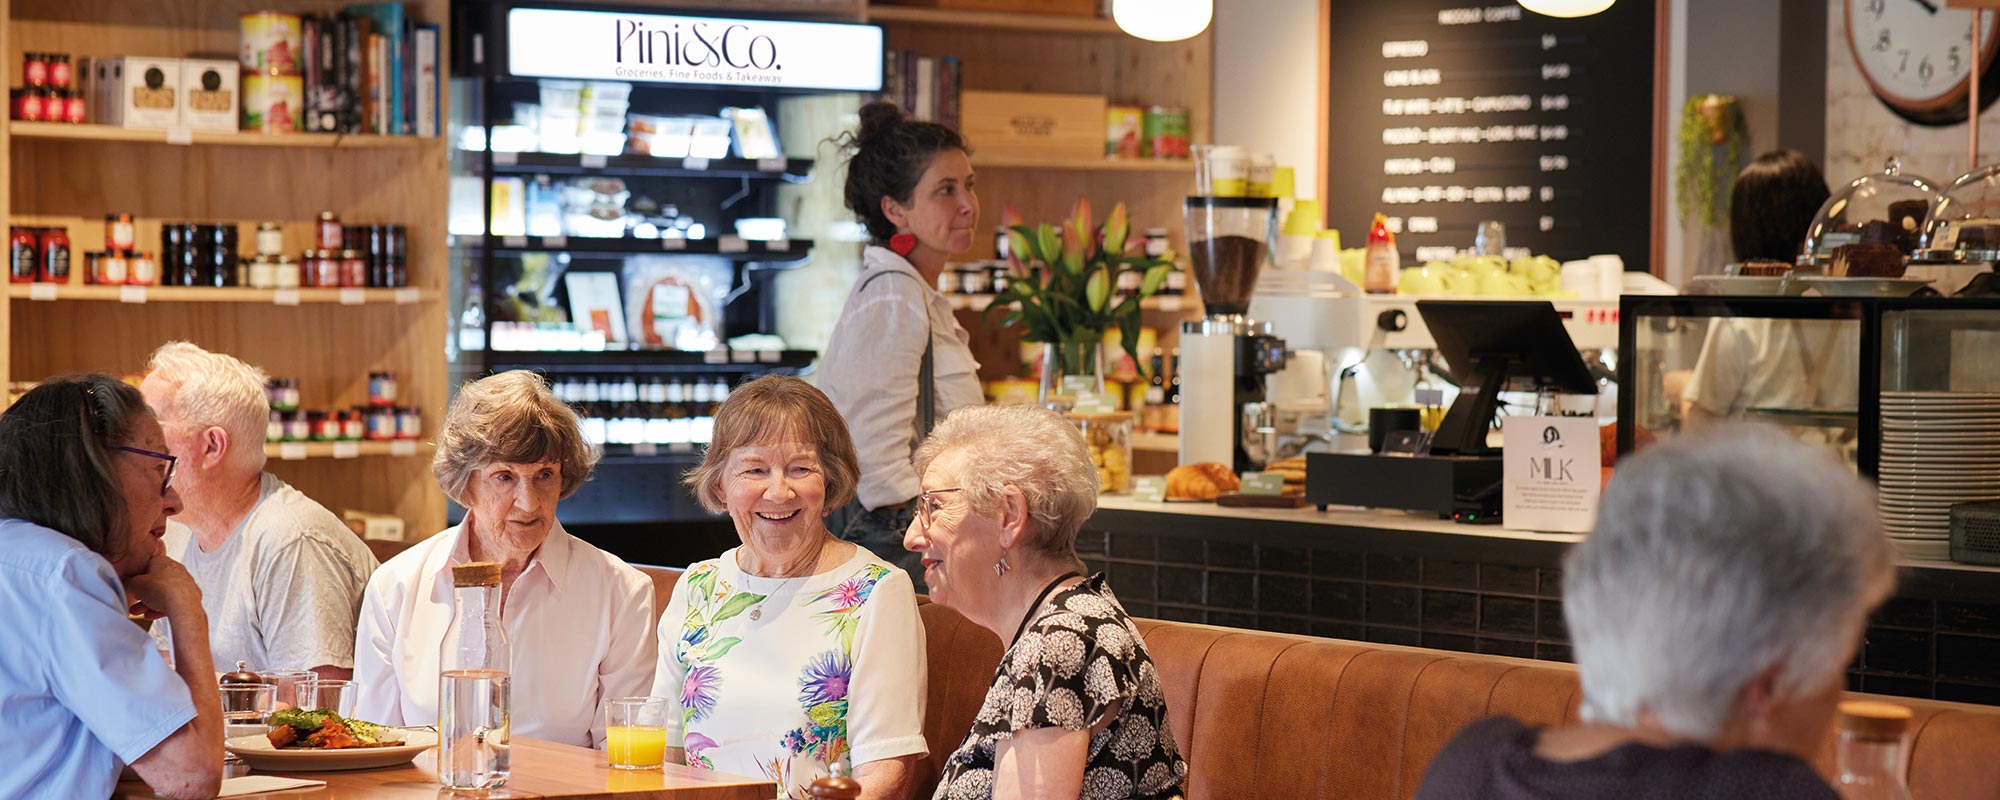 Europa on Alma café, Pini & Co - interior with people enjoying coffee and snacks